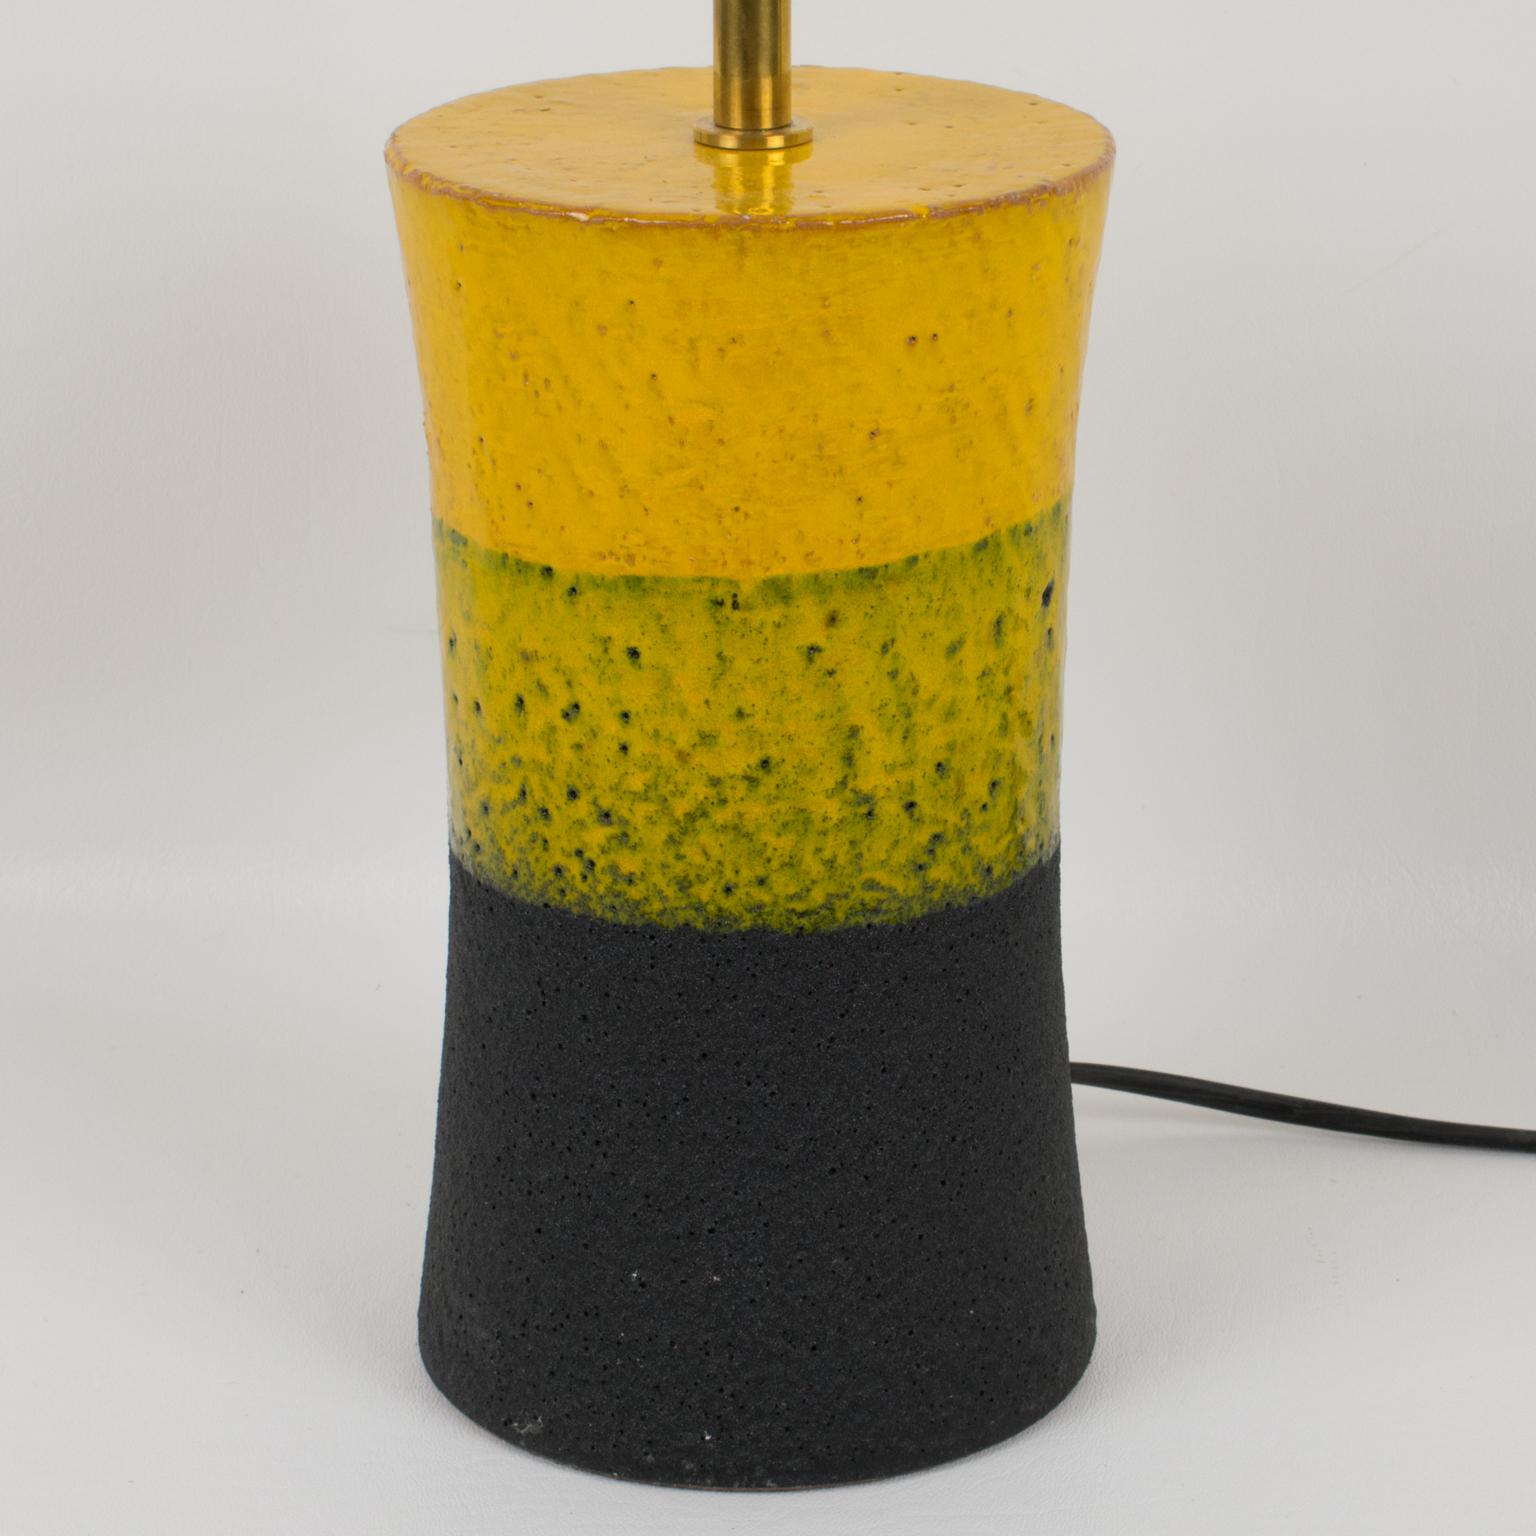 Faience Aldo Londi for Bitossi Italy Mondrian Design Ceramic Table Lamp, 1960s For Sale